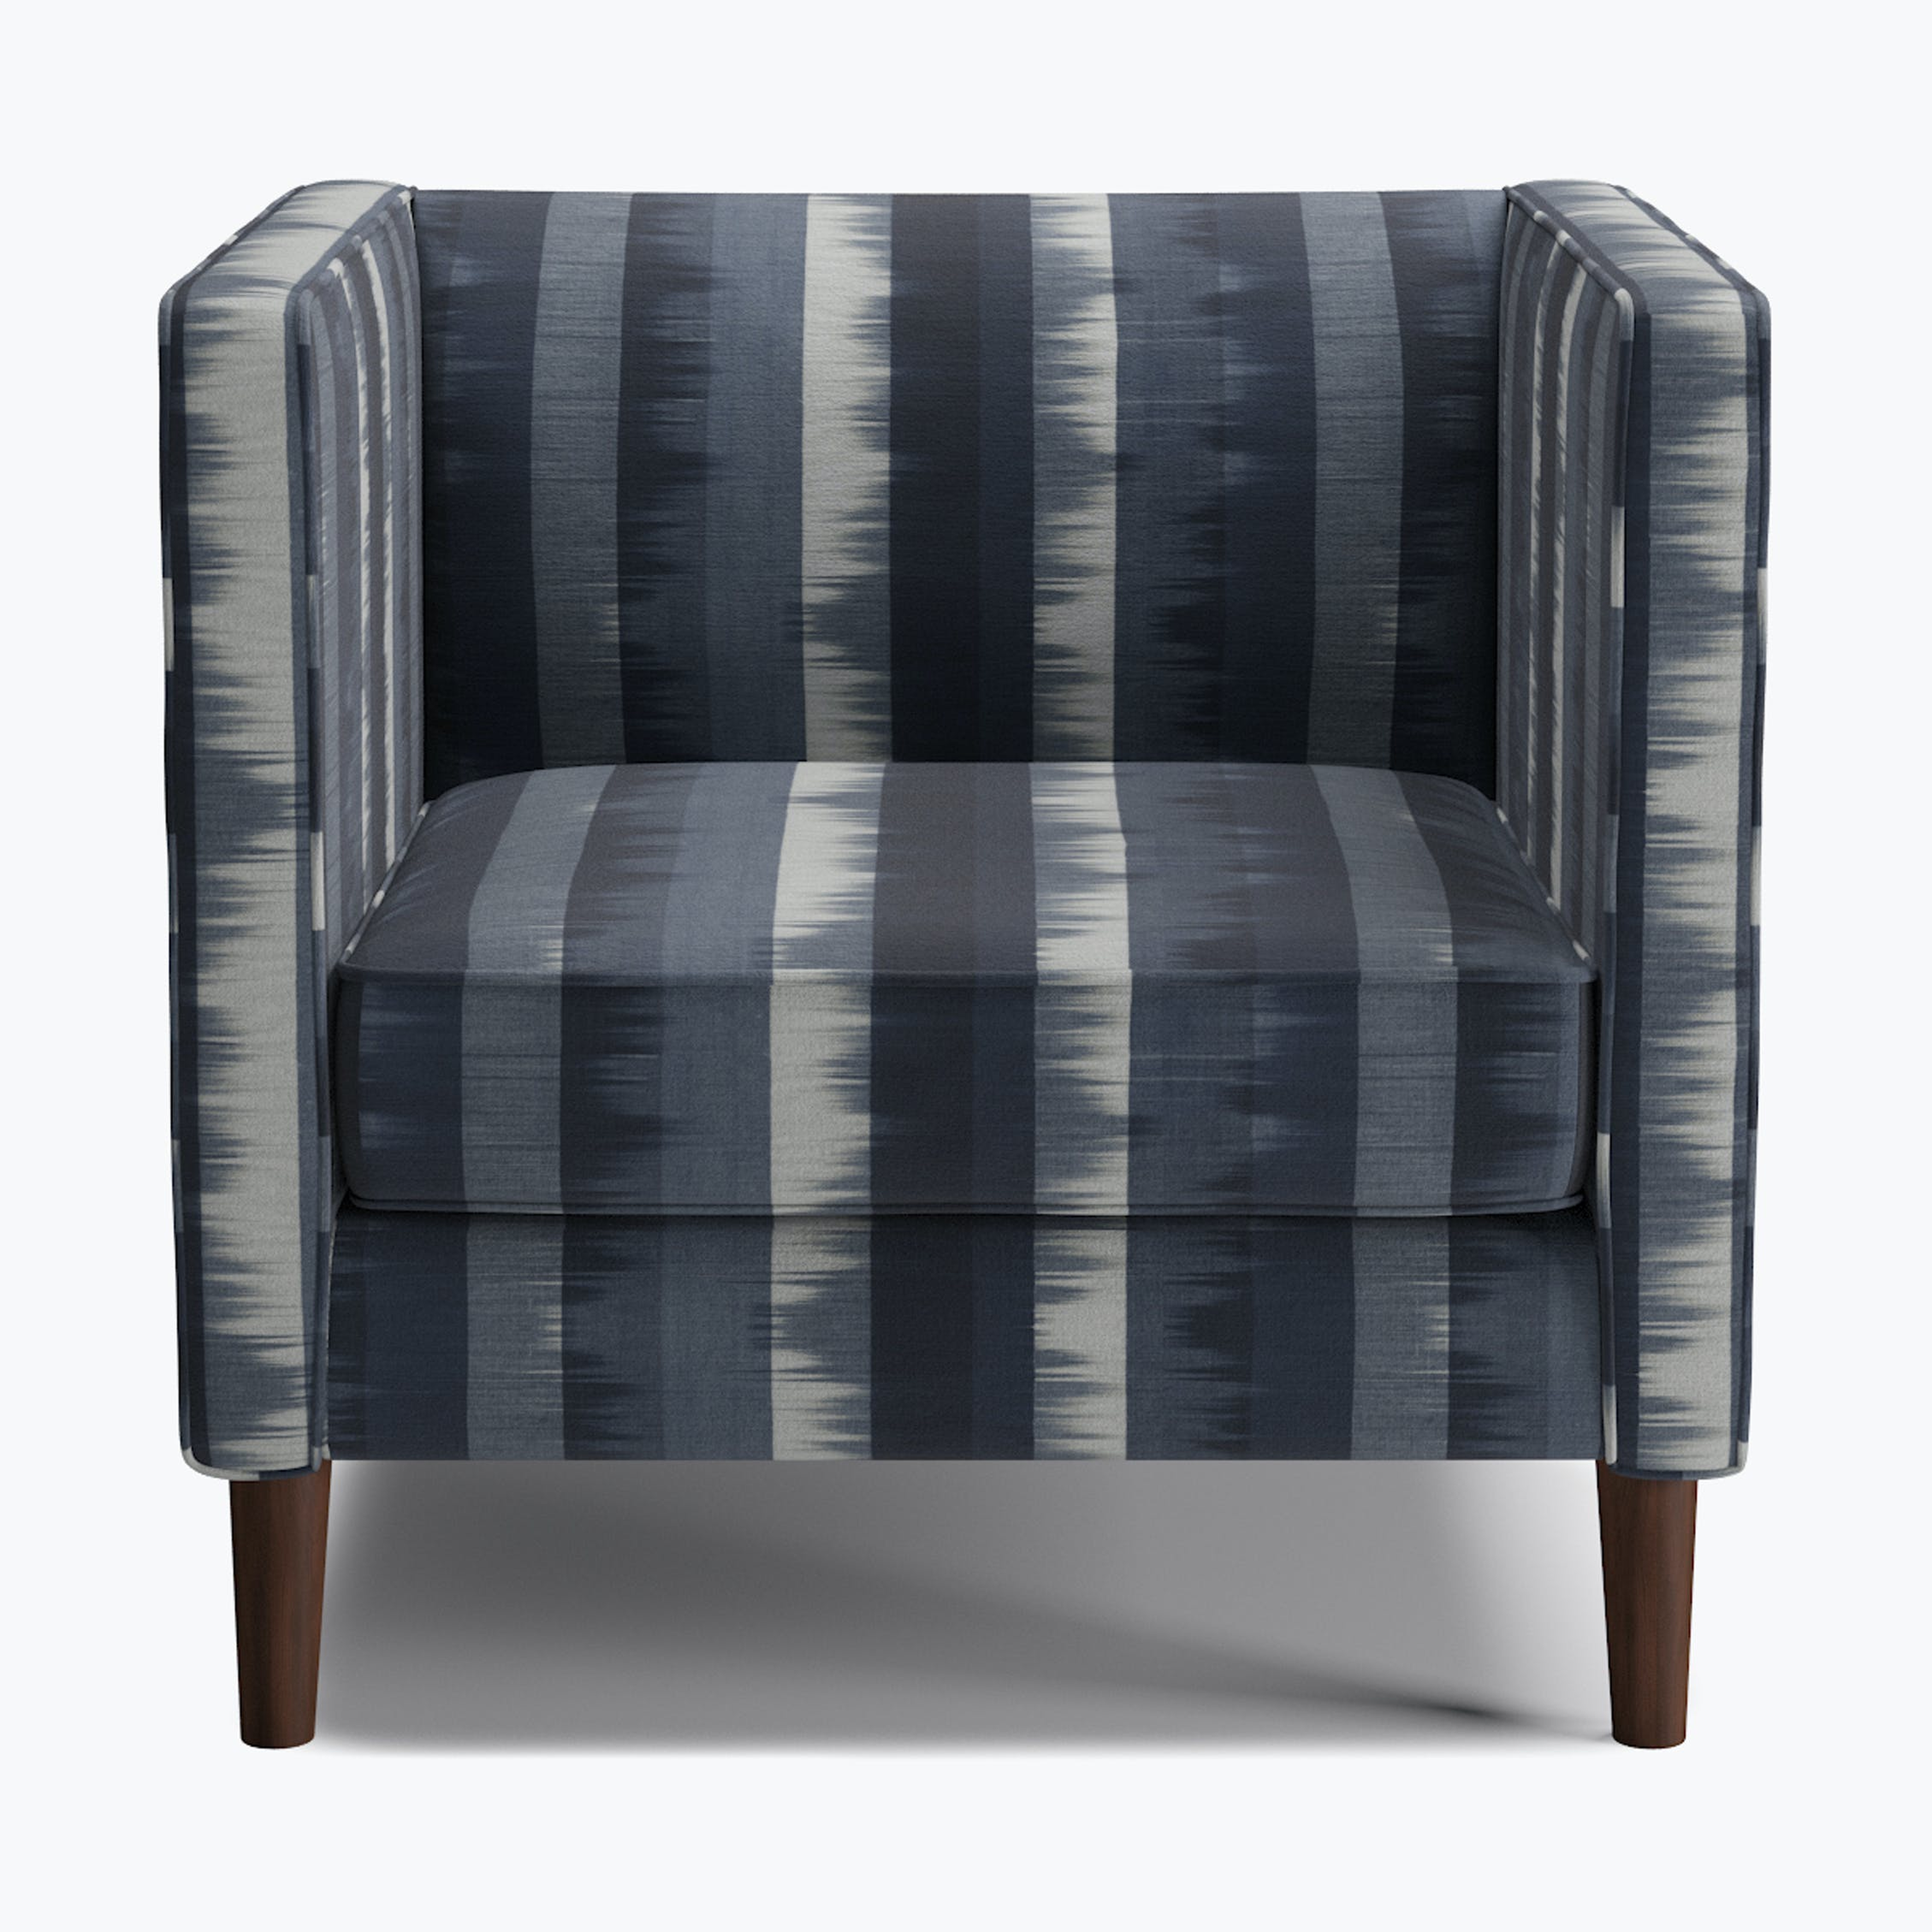 Tuxedo Chair - Indigo Ikat Stripe - The Inside